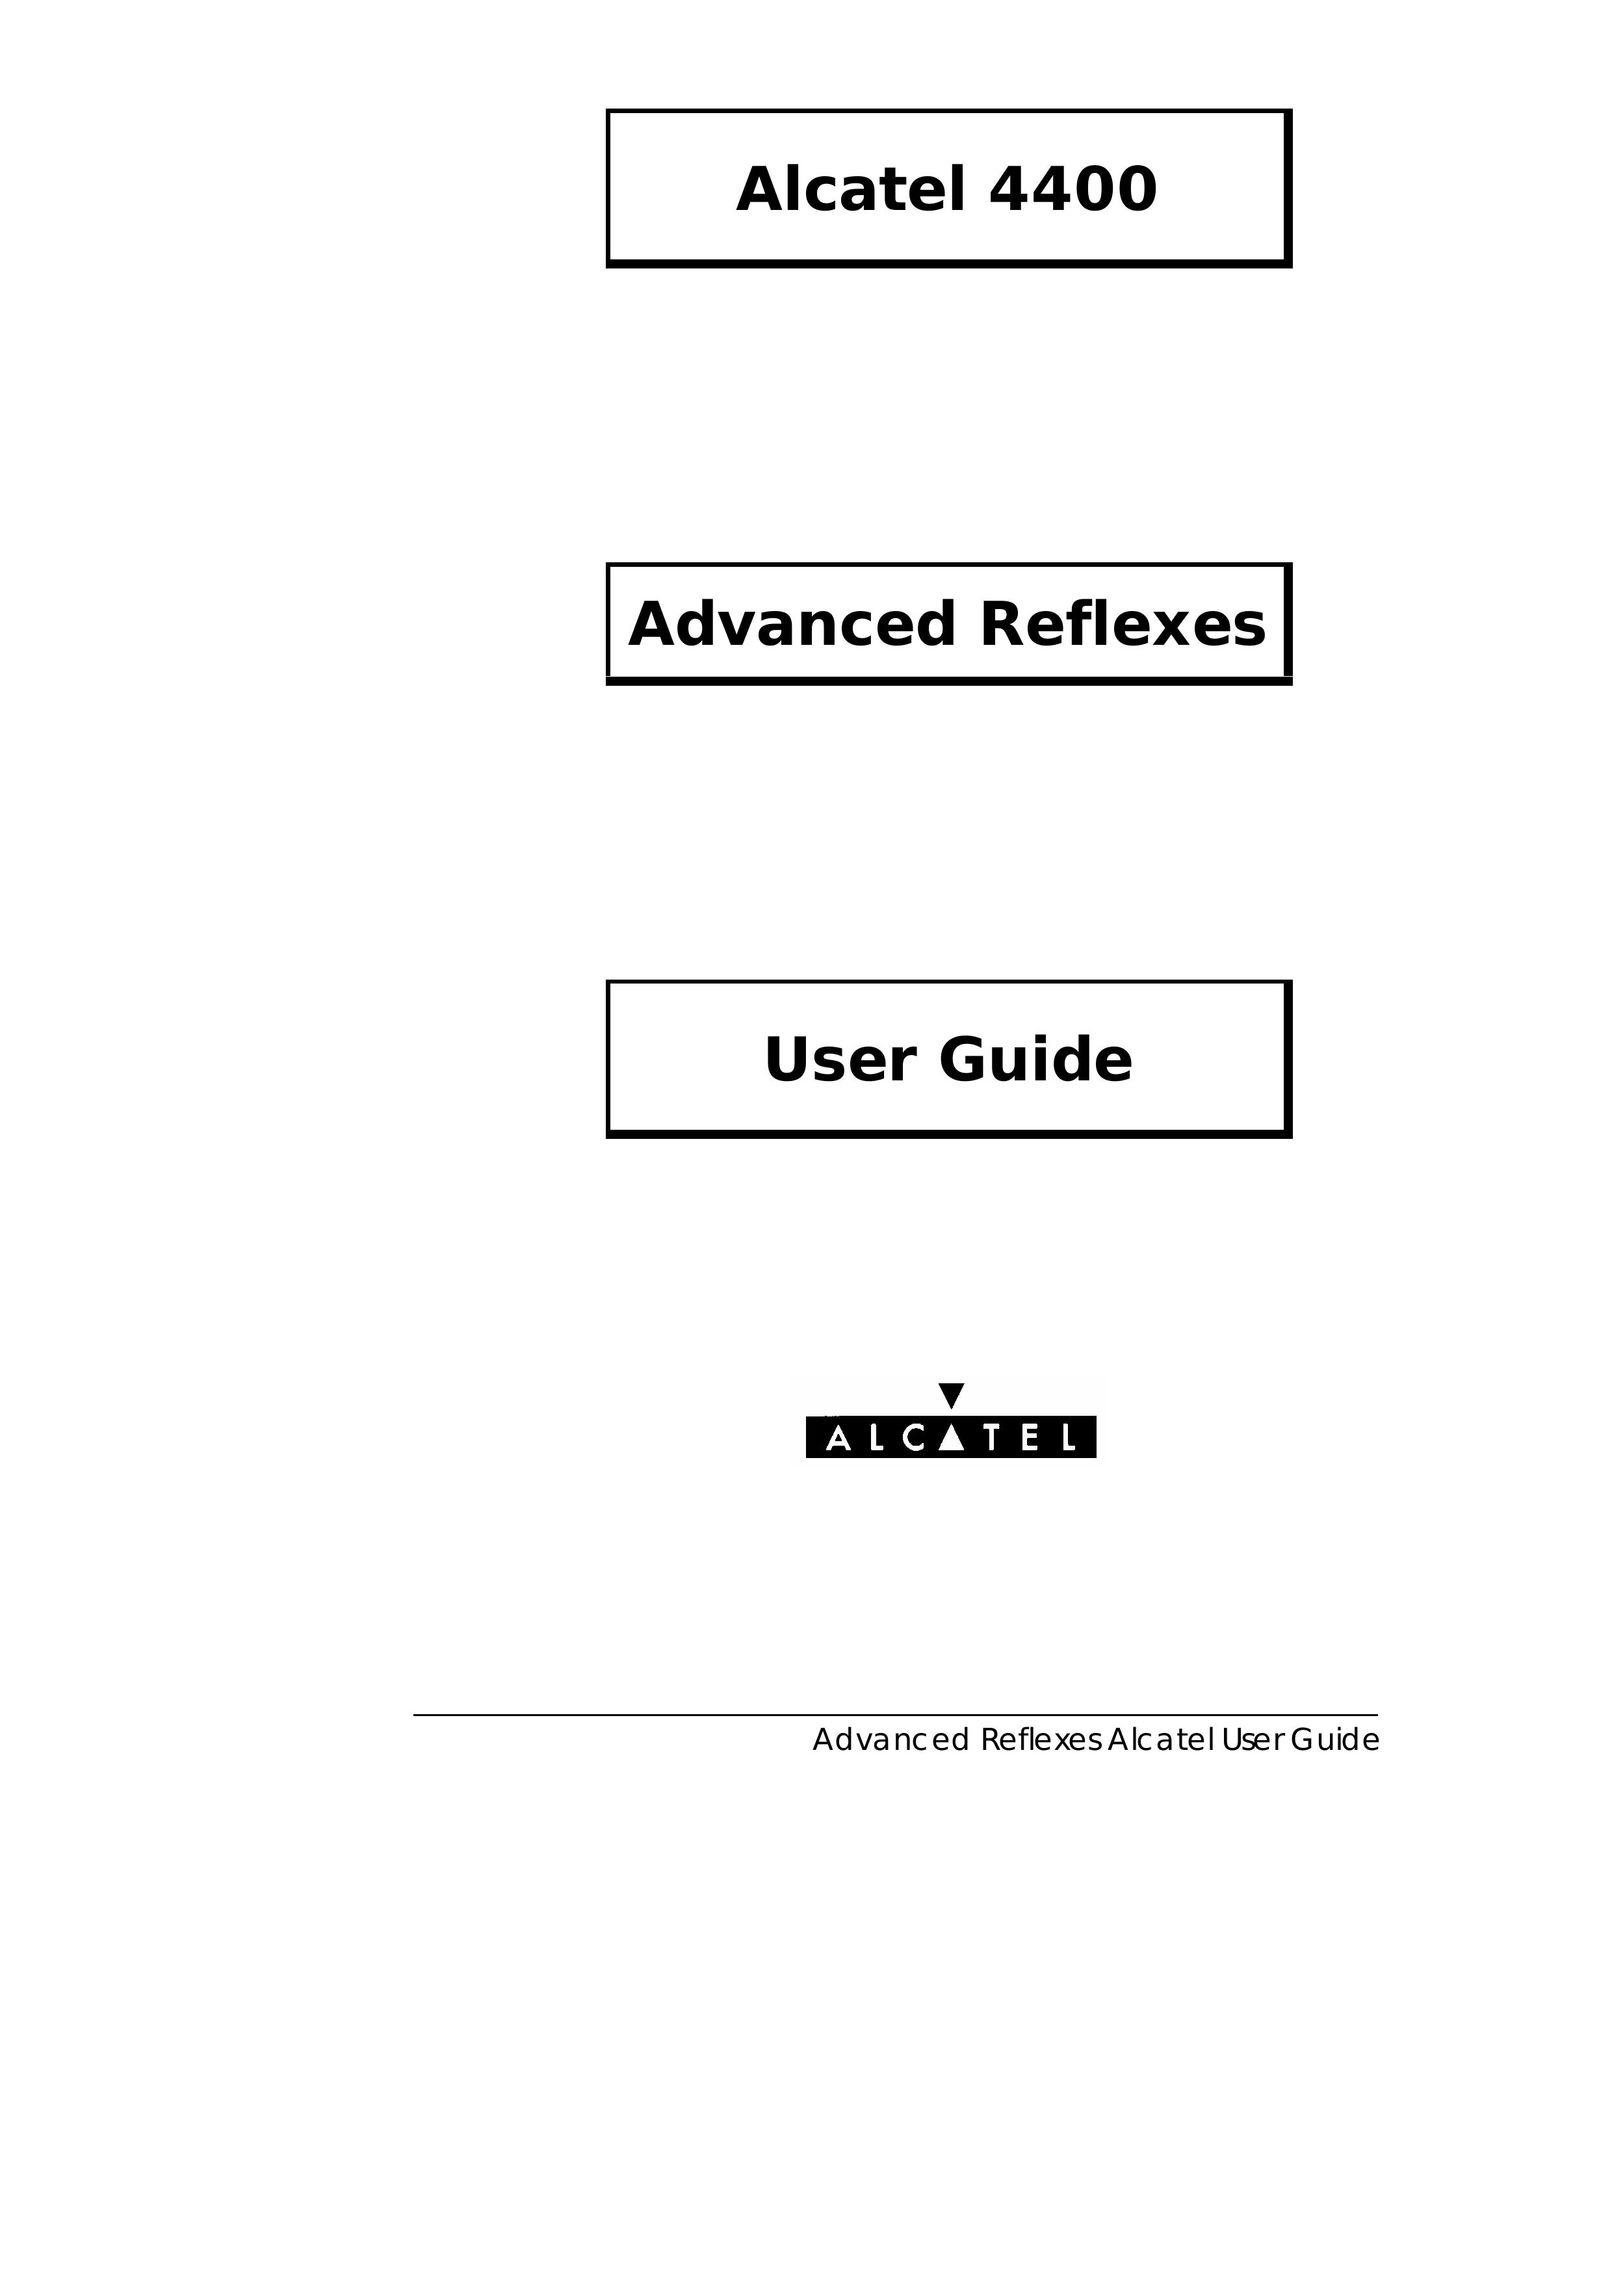 Alcatel-Lucent Alcatel 4400 Answering Machine User Manual